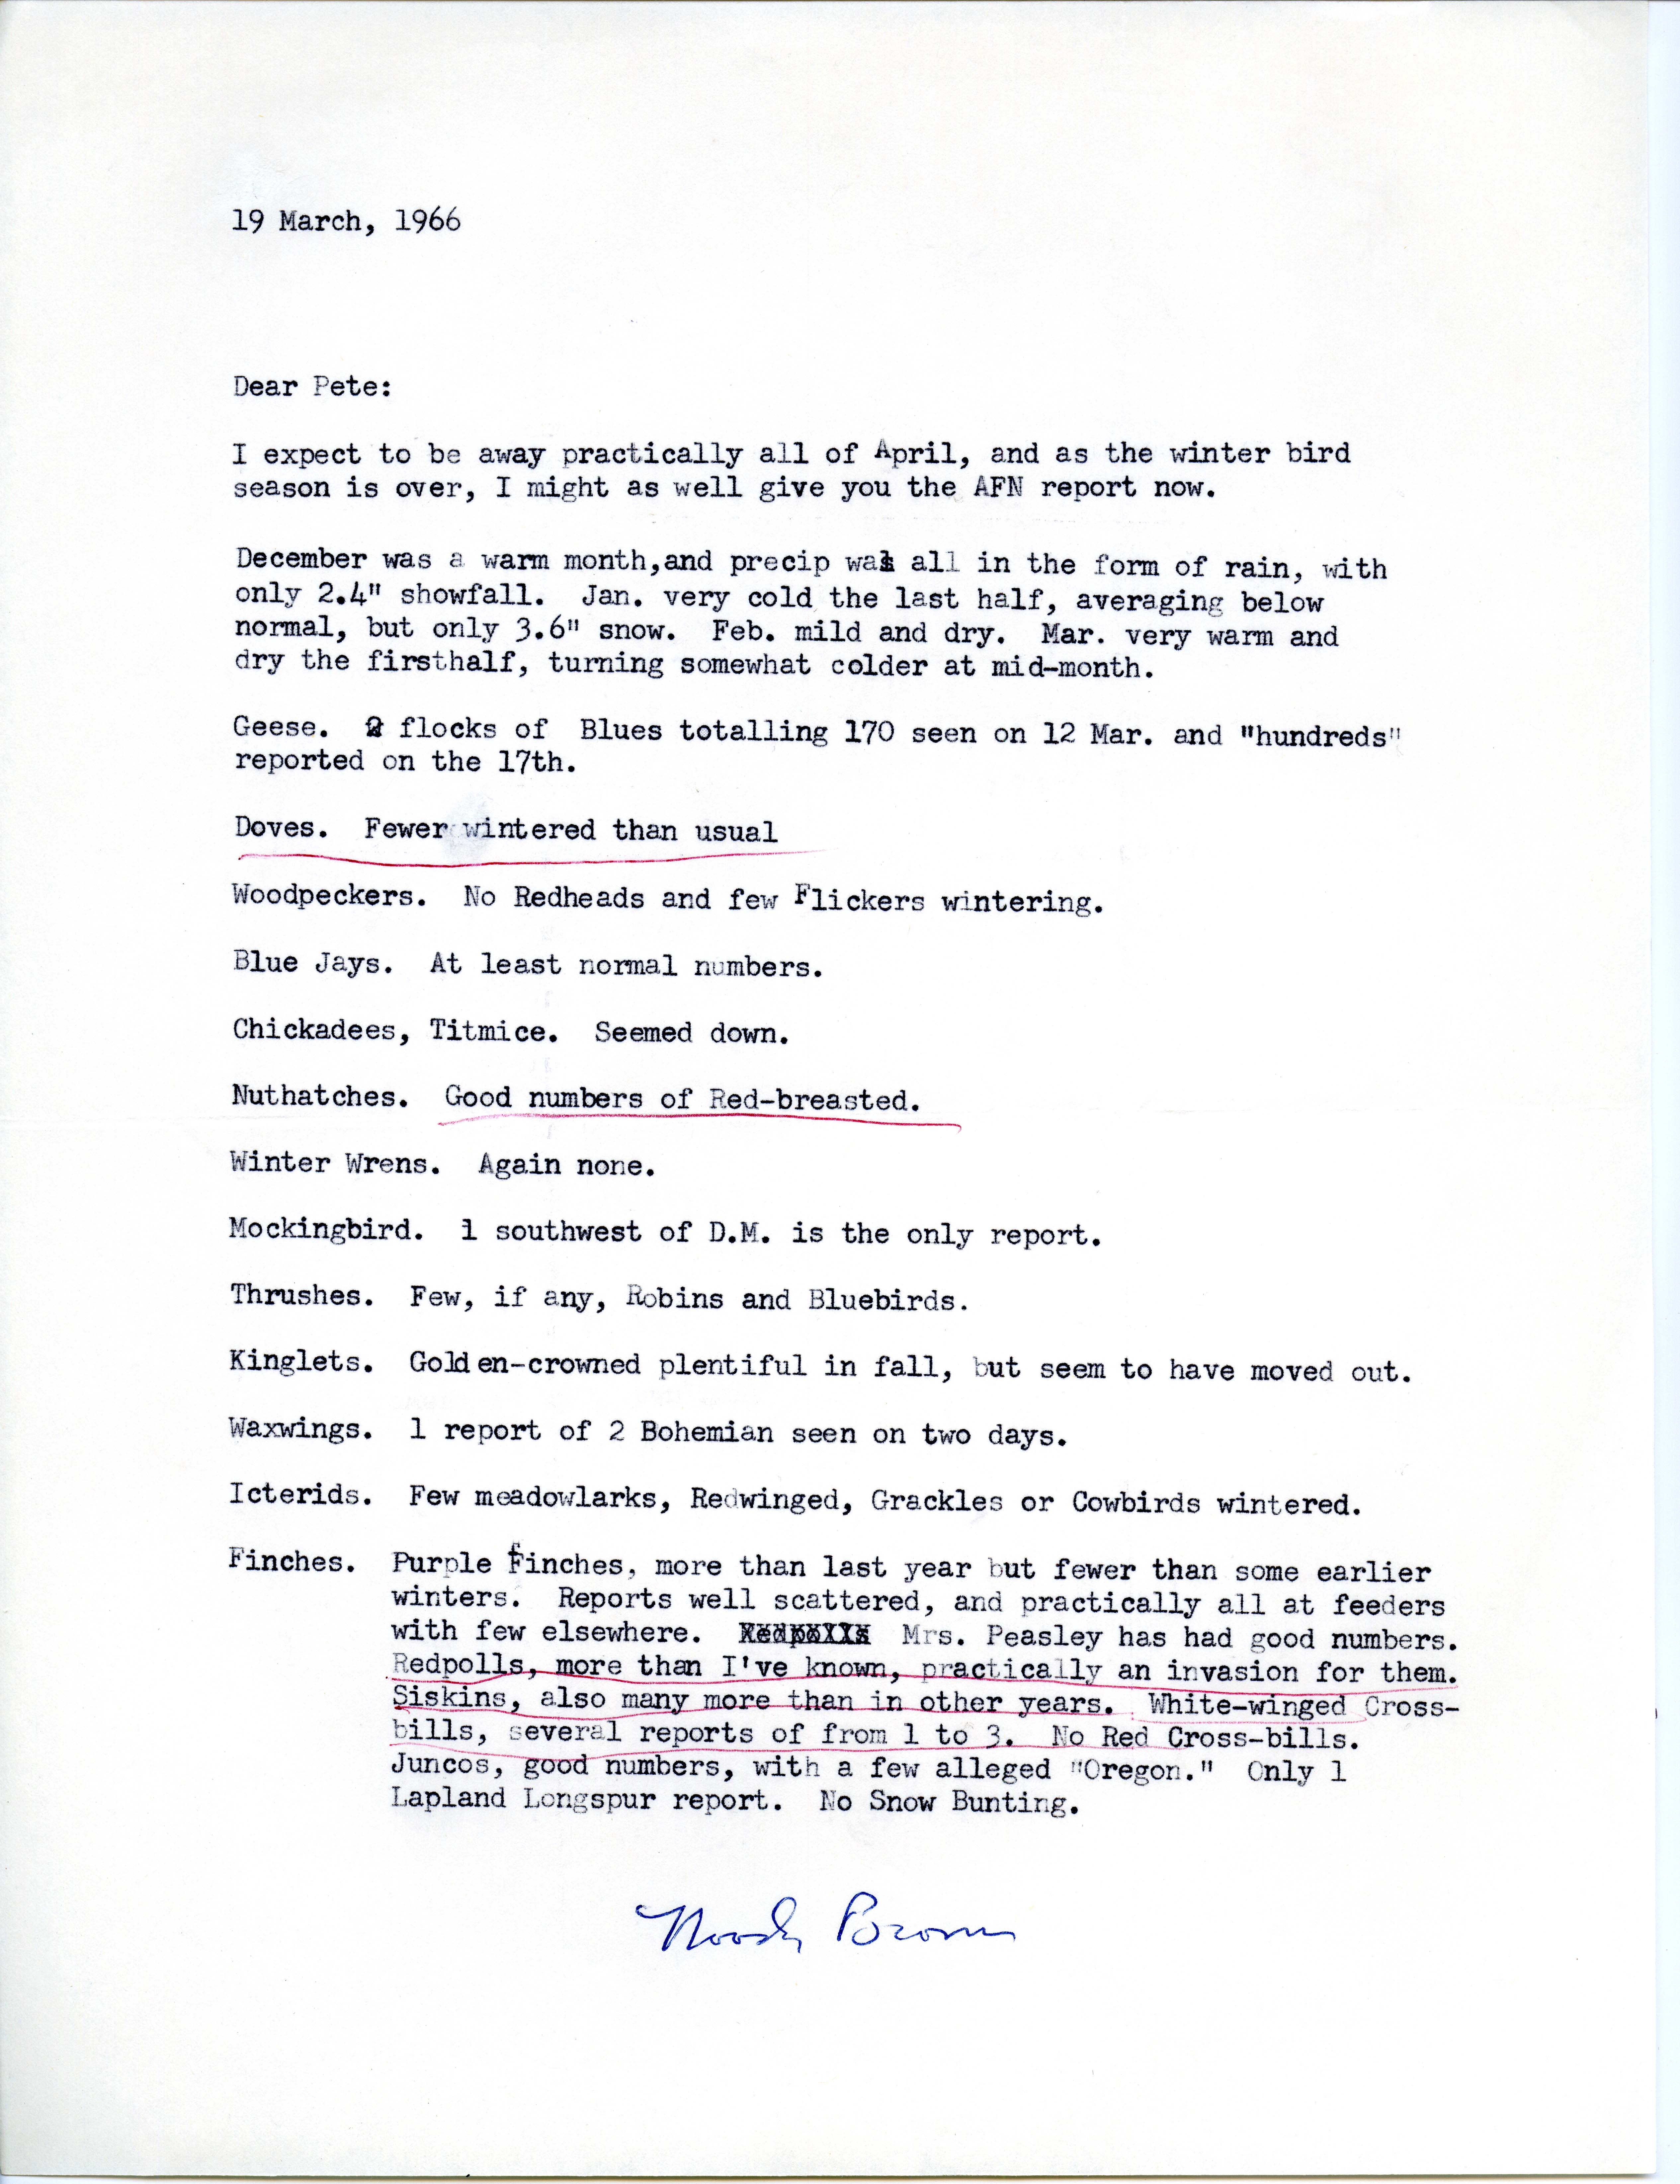 Woodward H. Brown letter to Peter C. Petersen regarding winter migration, March 19, 1966